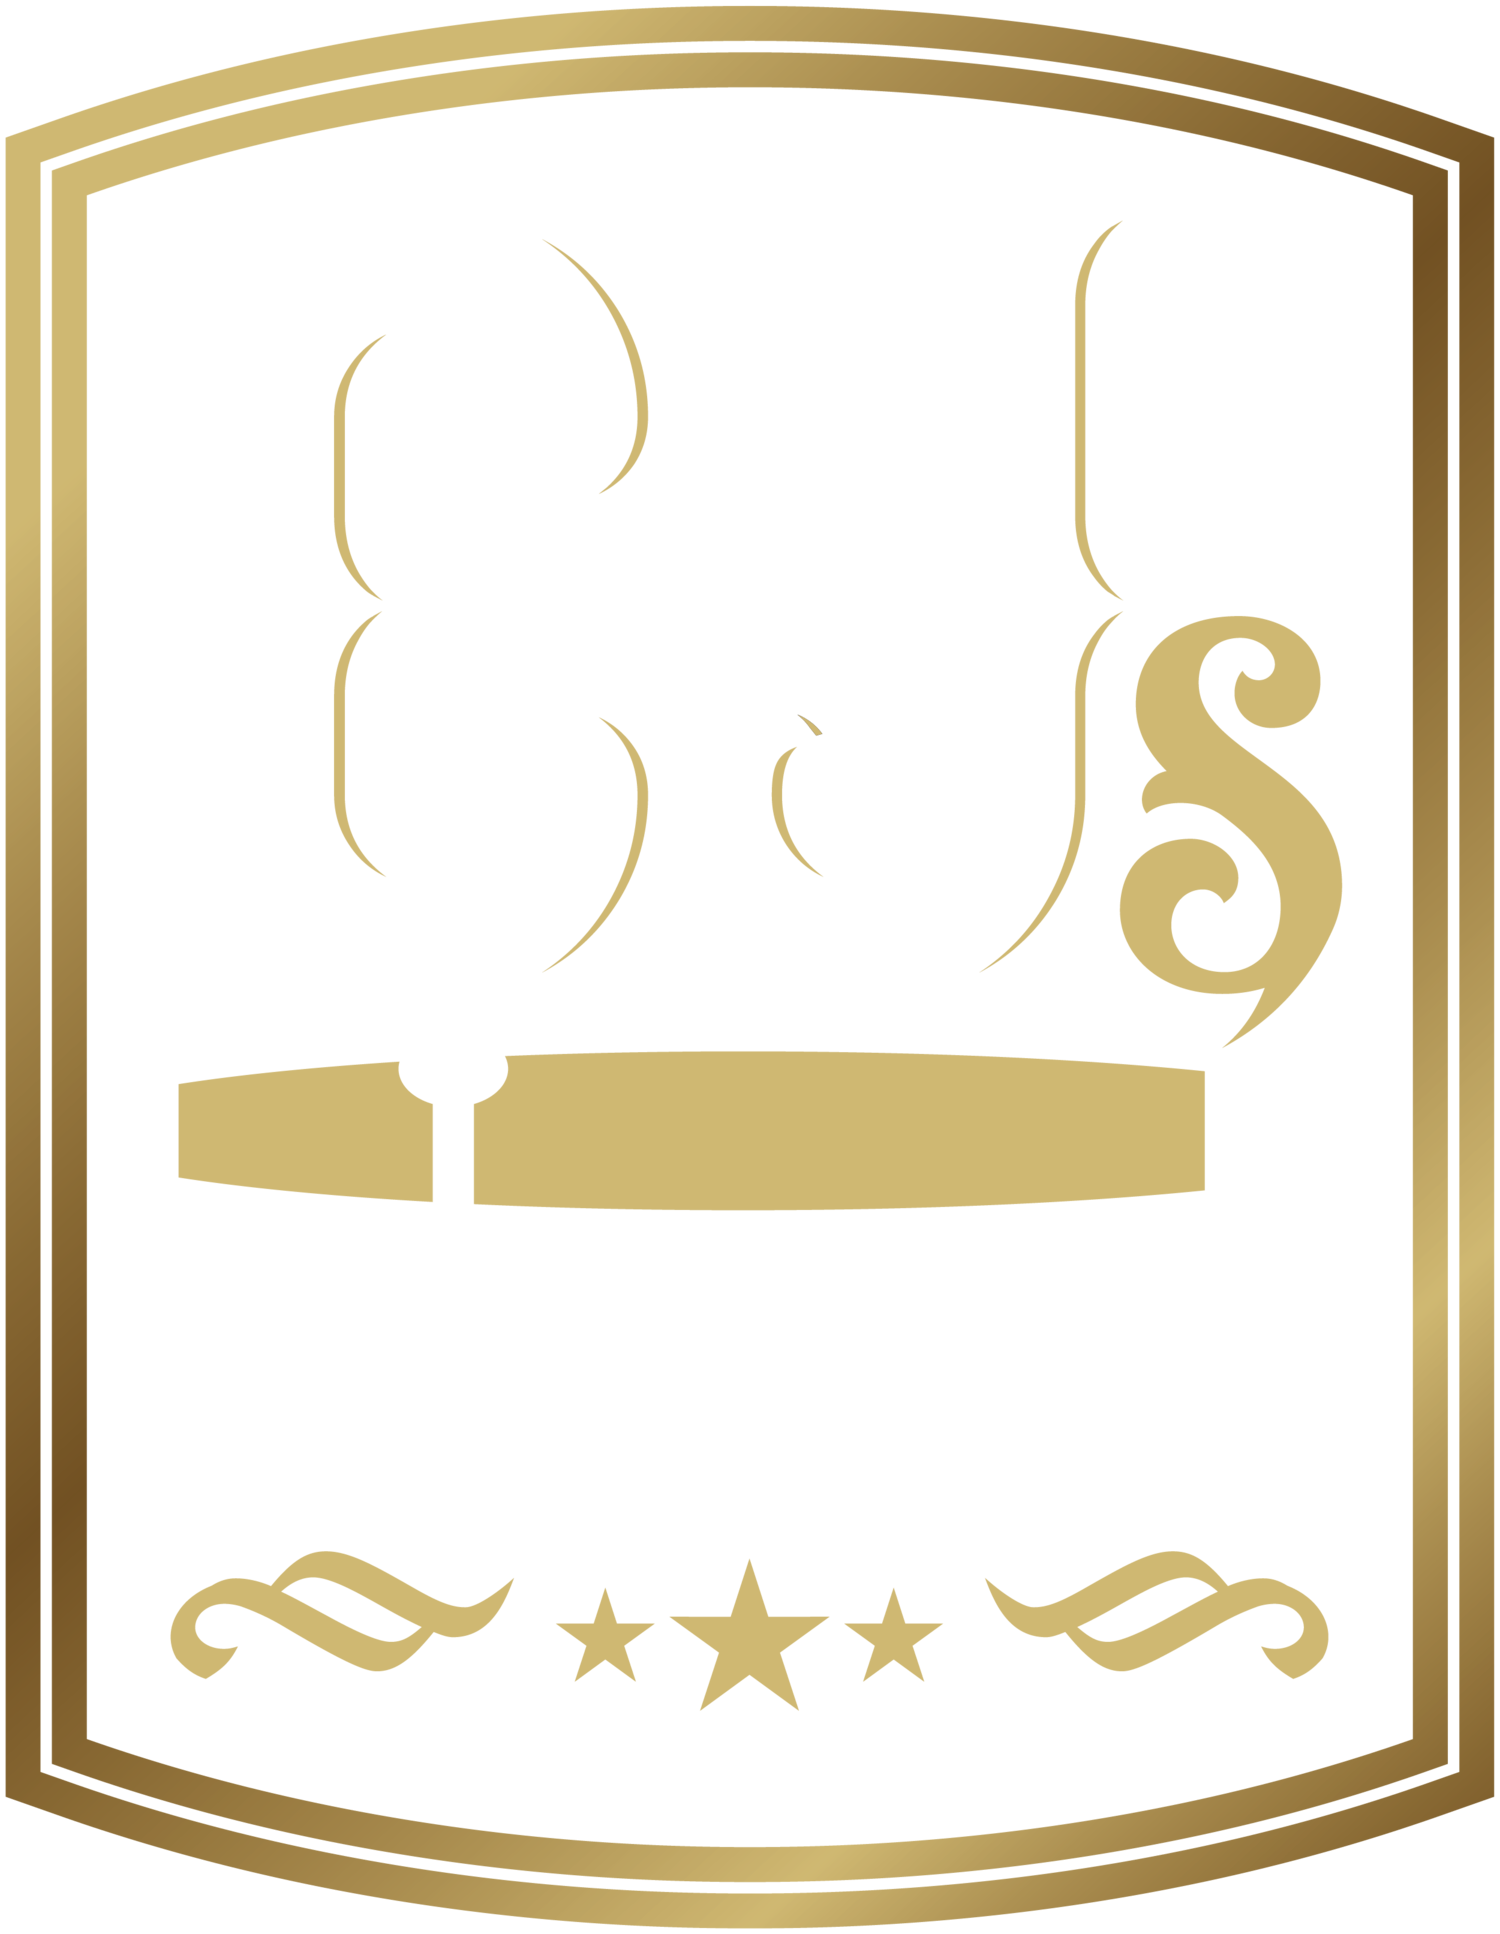 Cjs Cigars